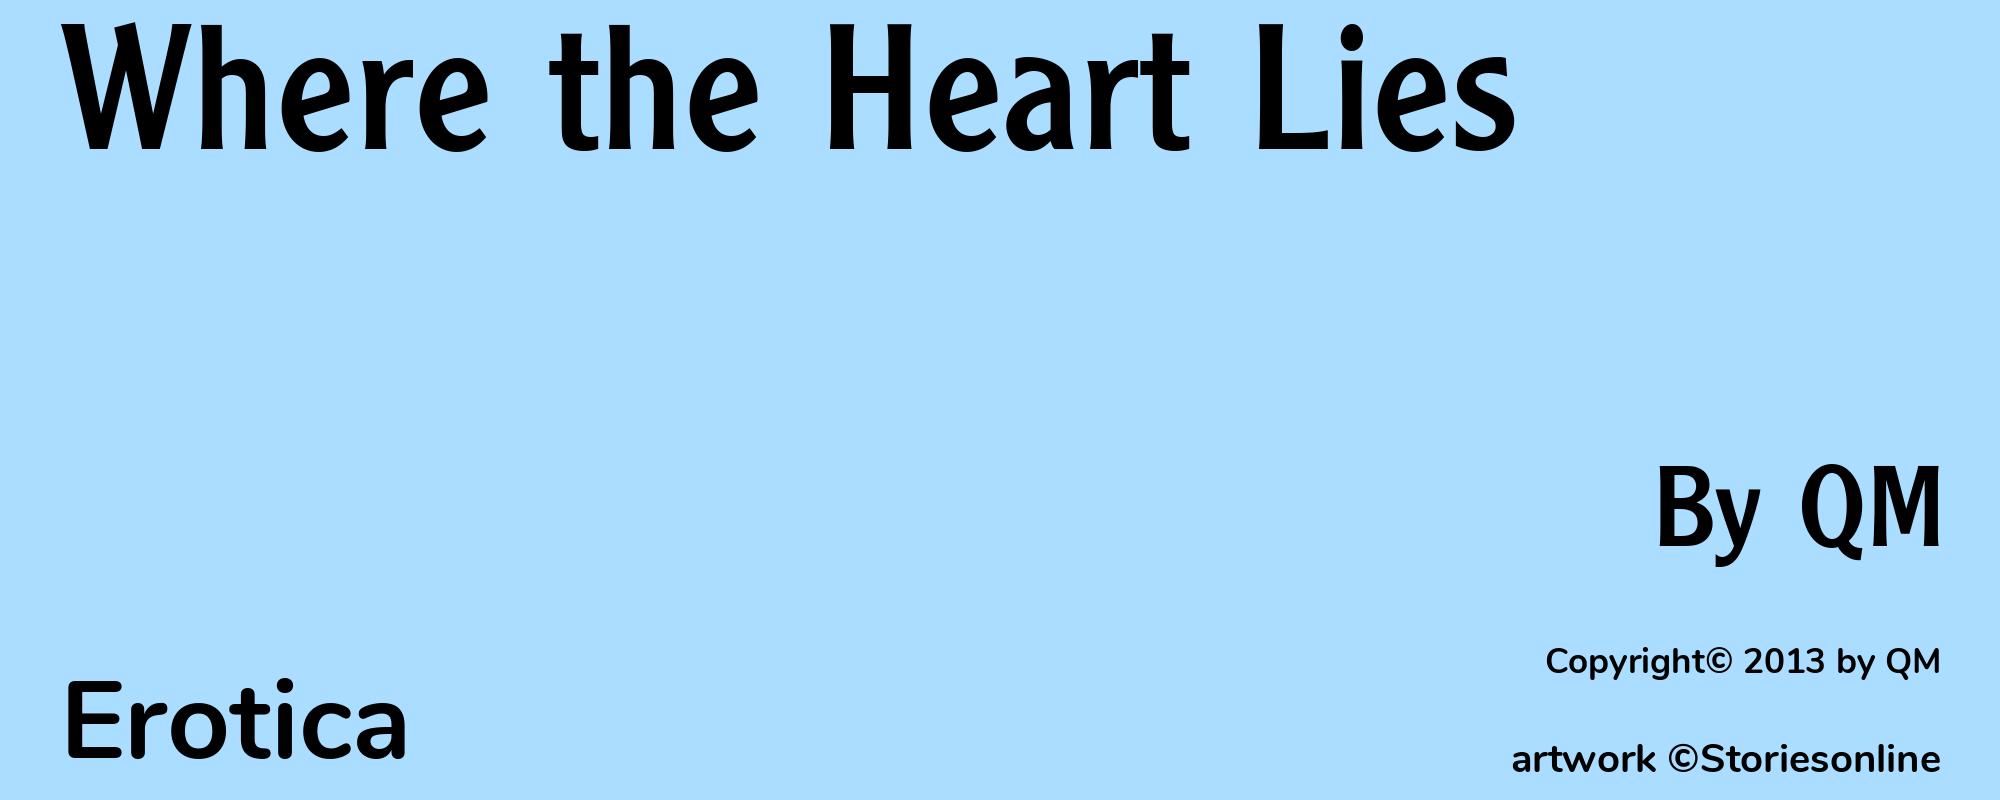 Where the Heart Lies - Cover